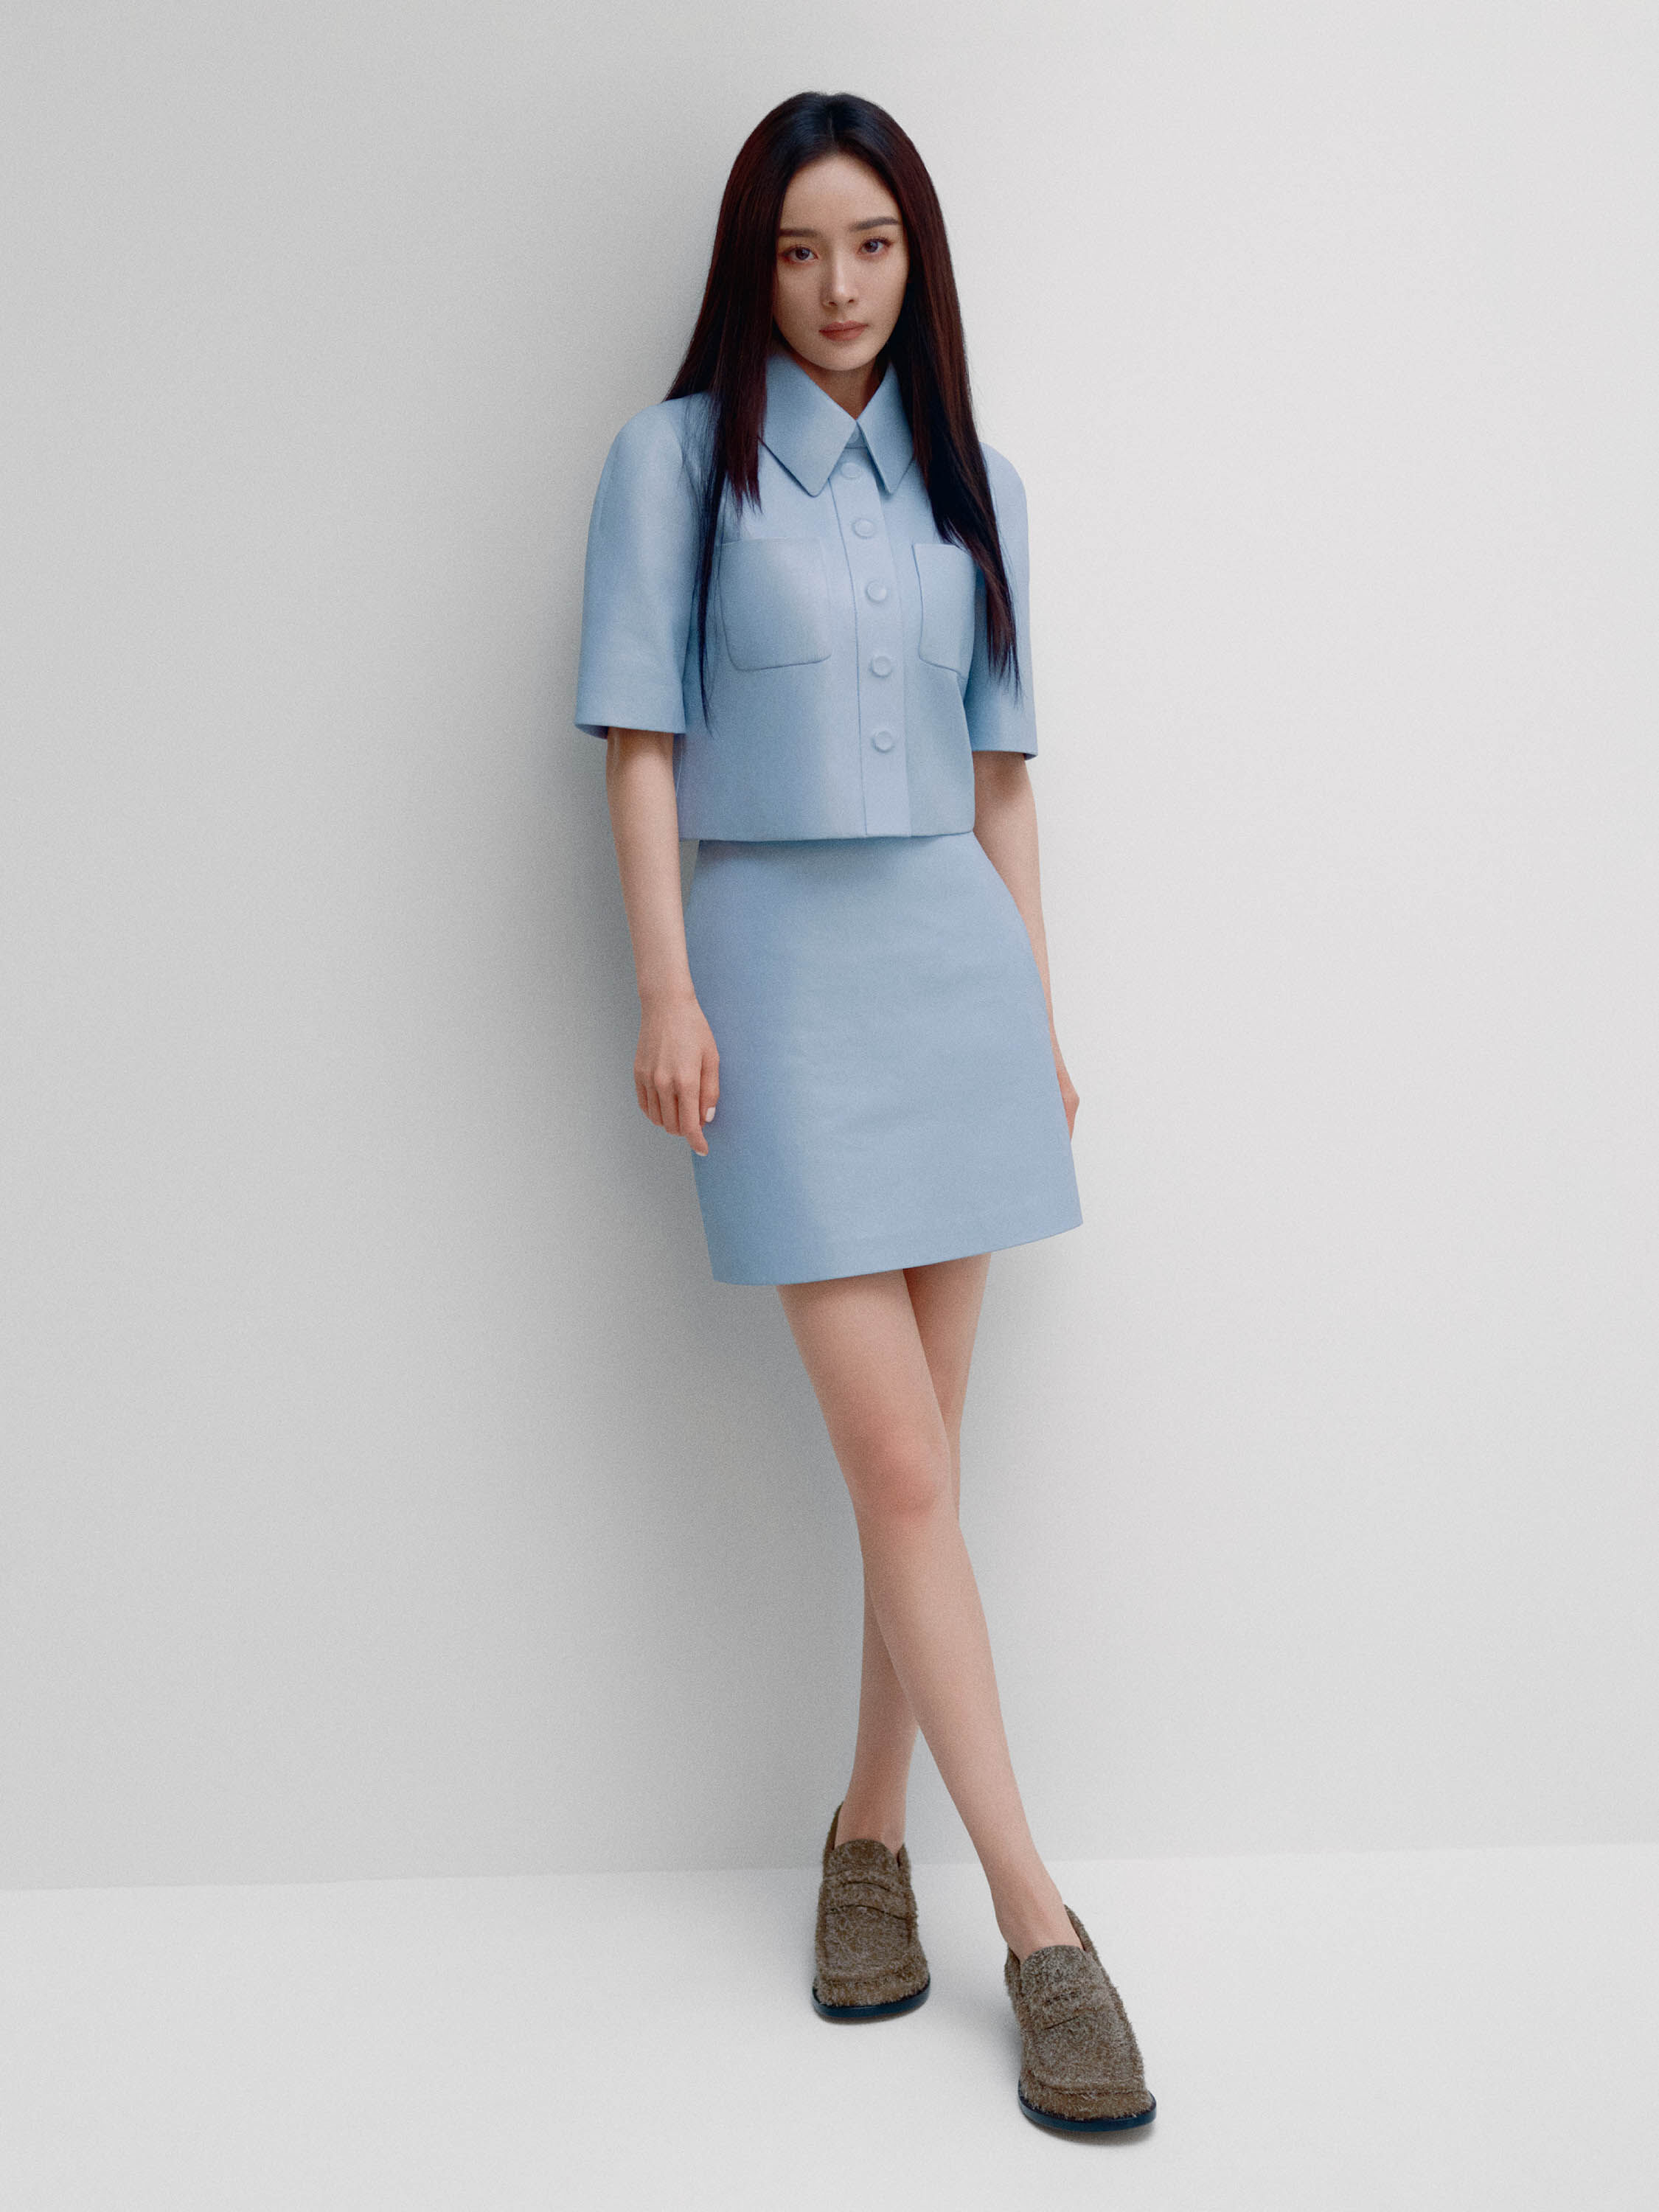 Yang Mi, new LOEWE Global Brand Ambassador 2023